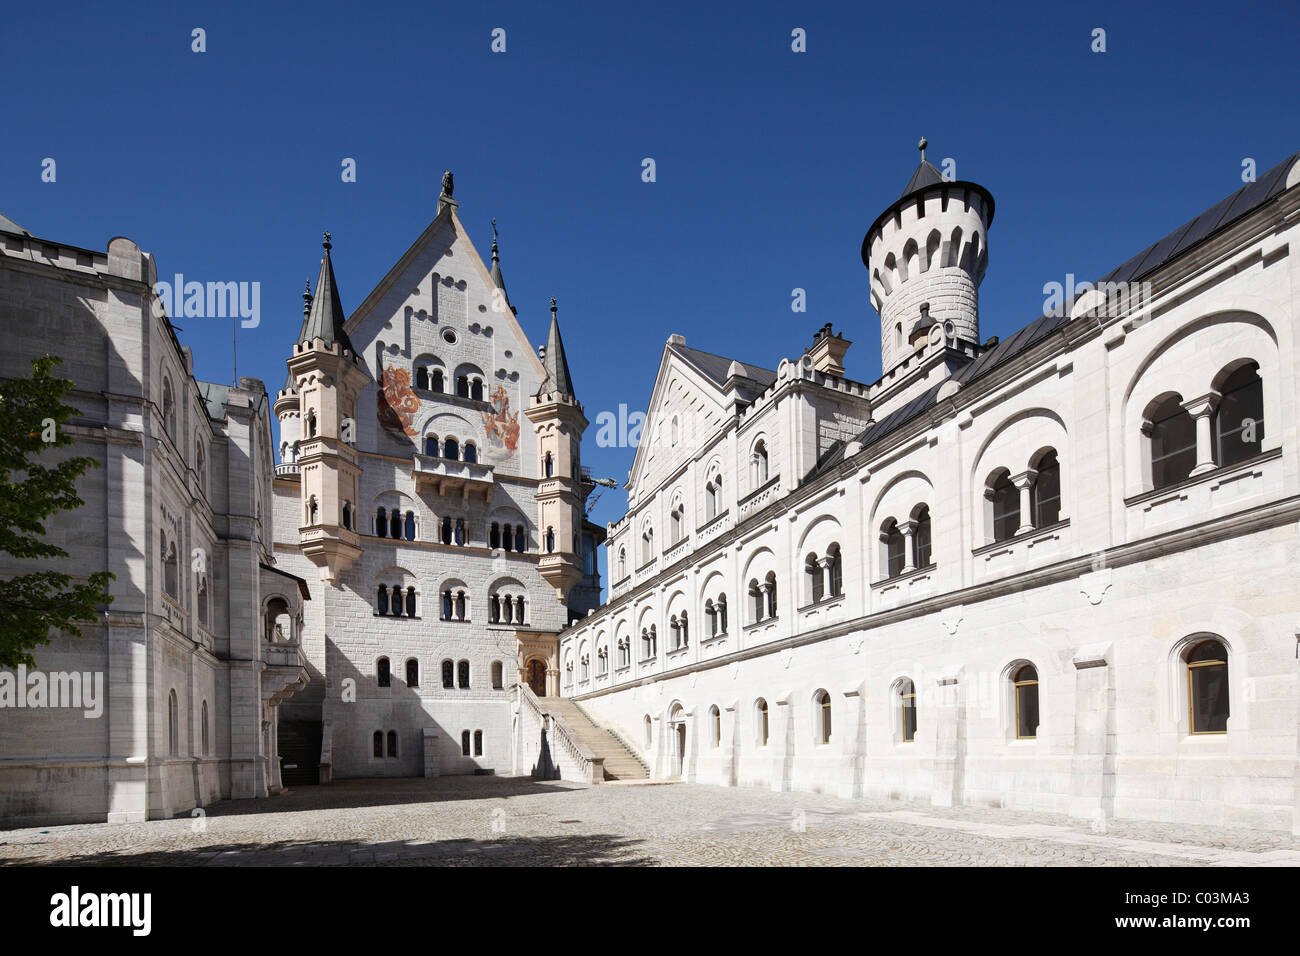 Courtyard of Schloss Neuschwanstein Castle, Ostallgaeu, Allgaeu, Schwaben, Bavaria, Germany, Europe Stock Photo